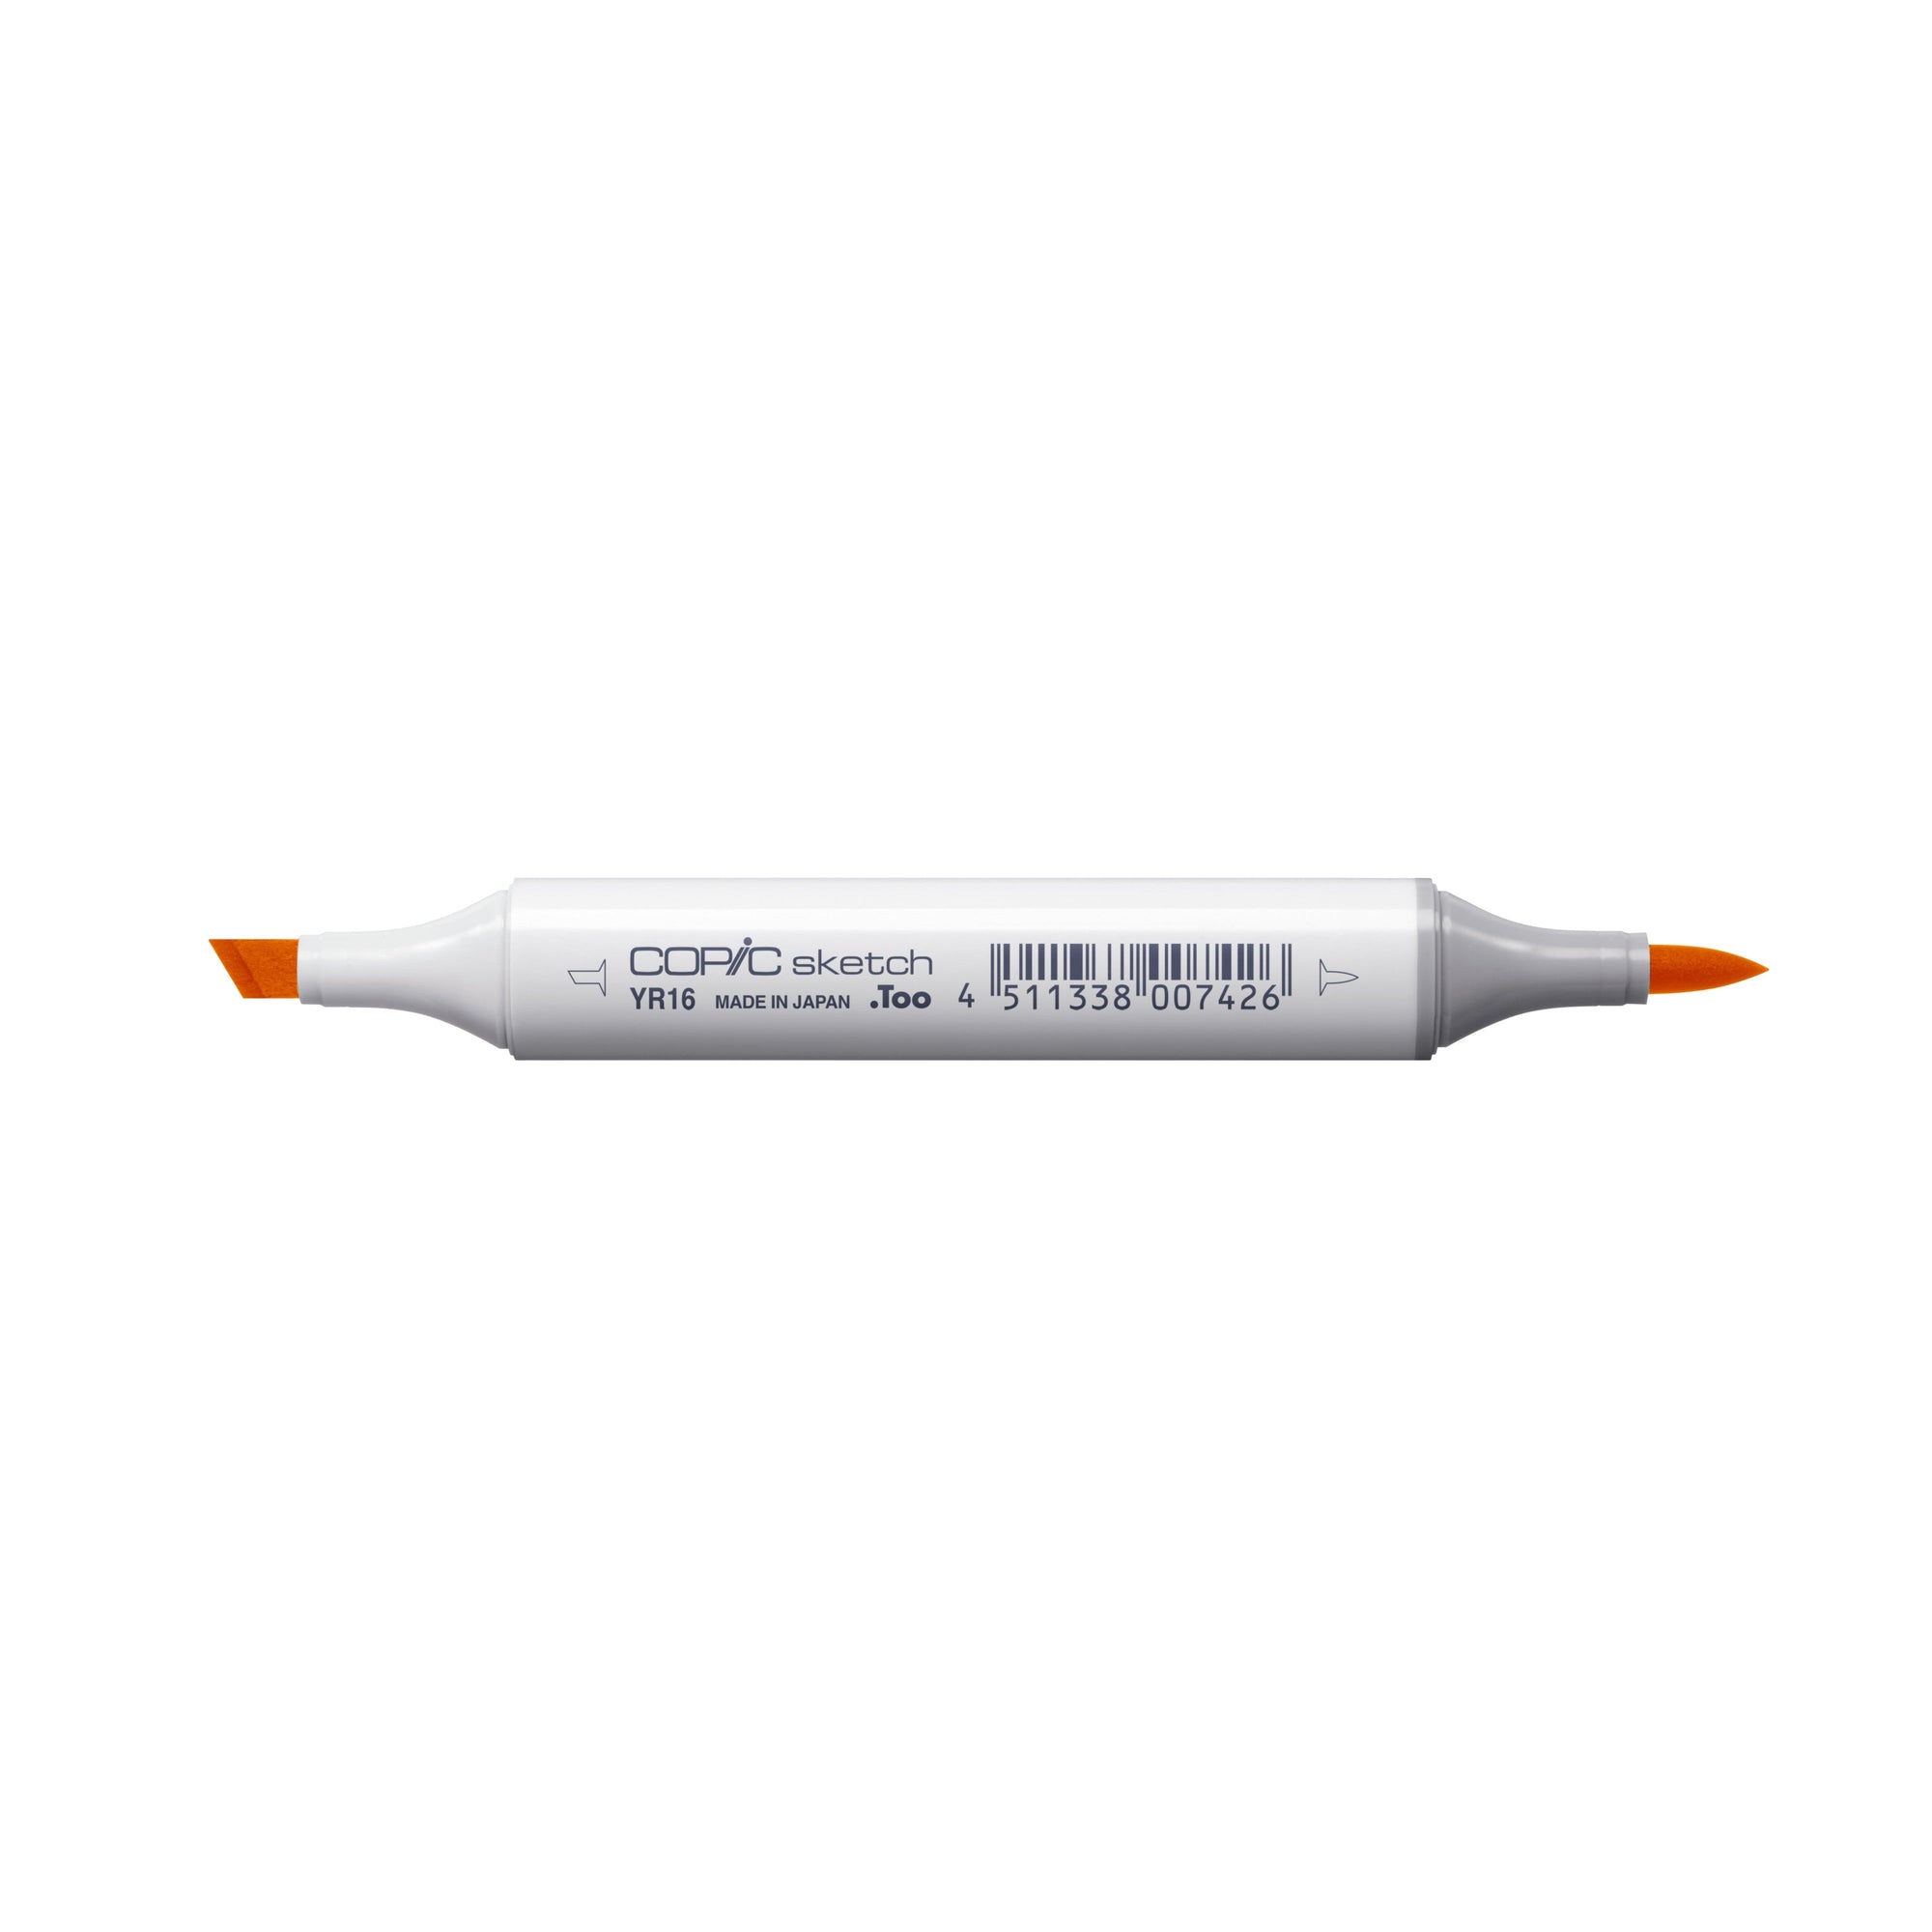 Copic - Sketch Marker - Apricot - YR16-ScrapbookPal